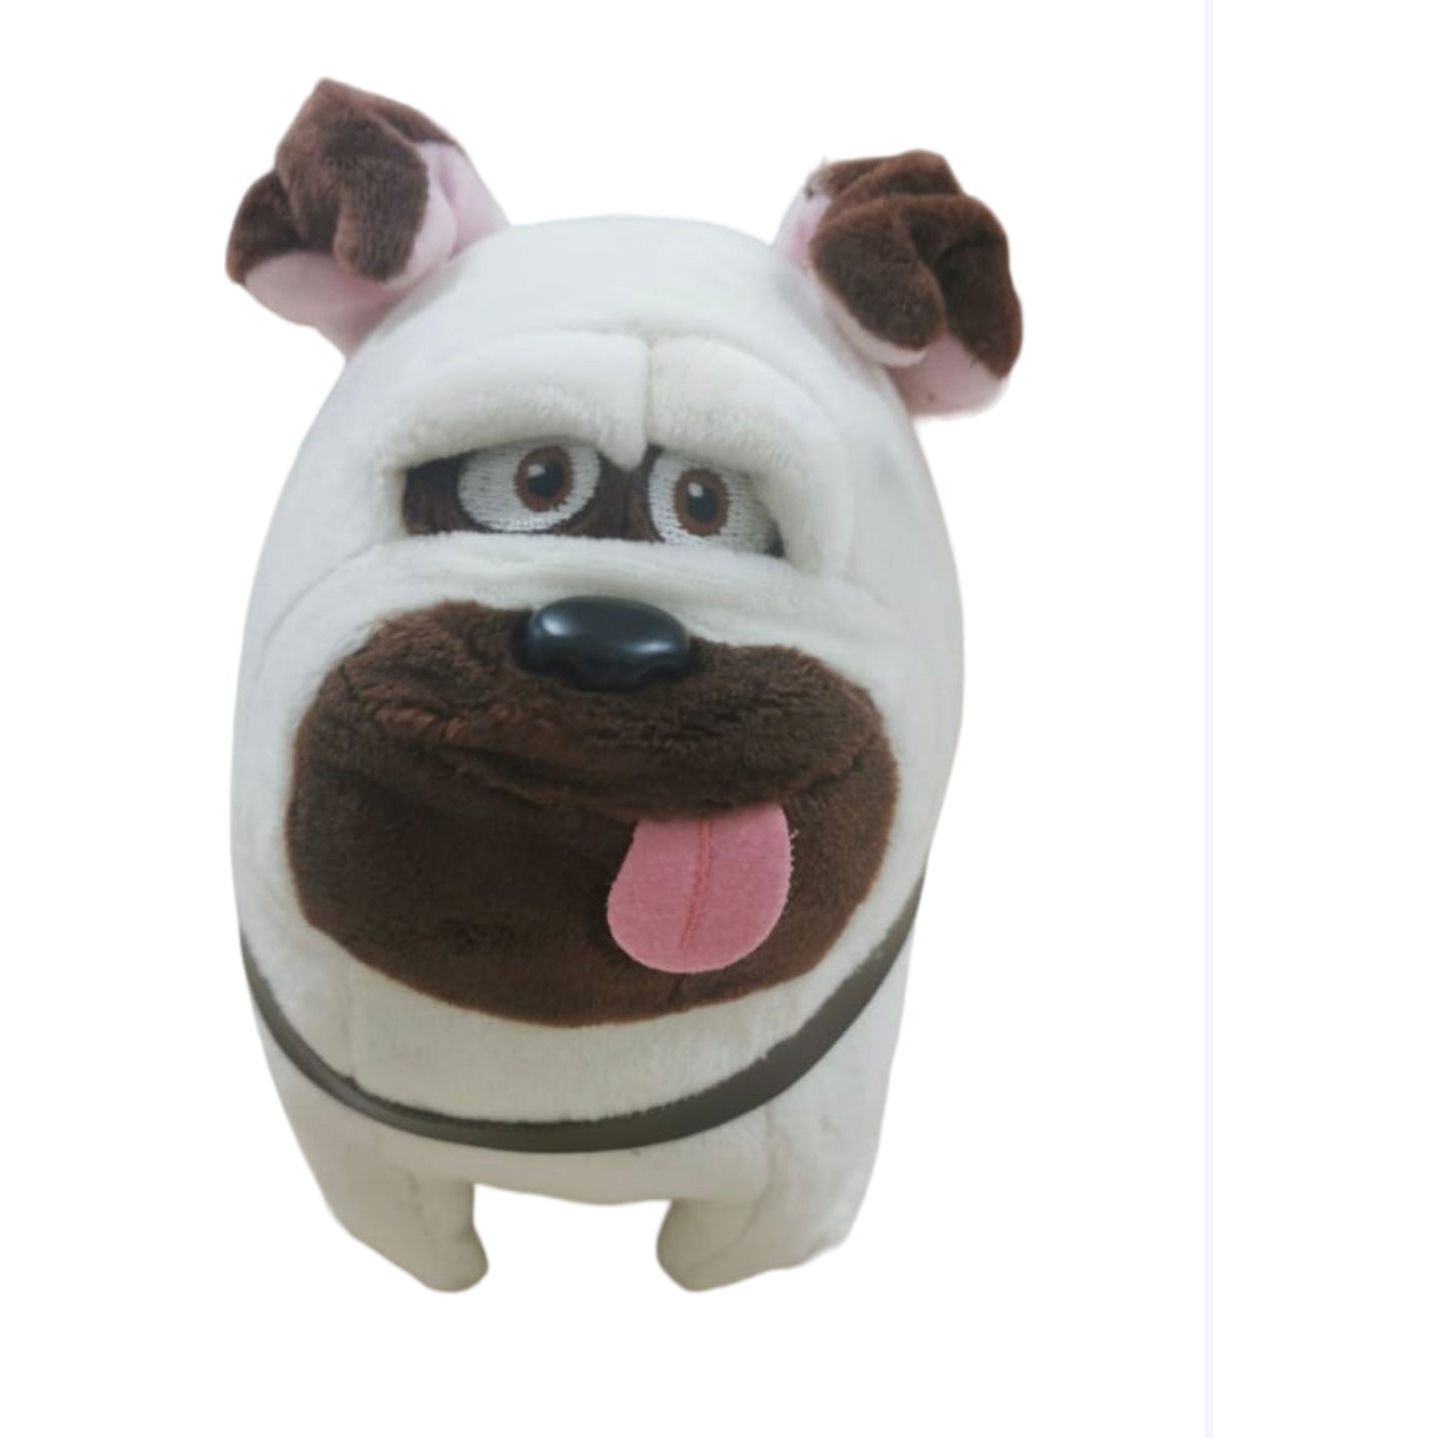 Pibi Cute & Supersoft Dog Plush Toy 15 cm White/Brown Age - Newborn & Above